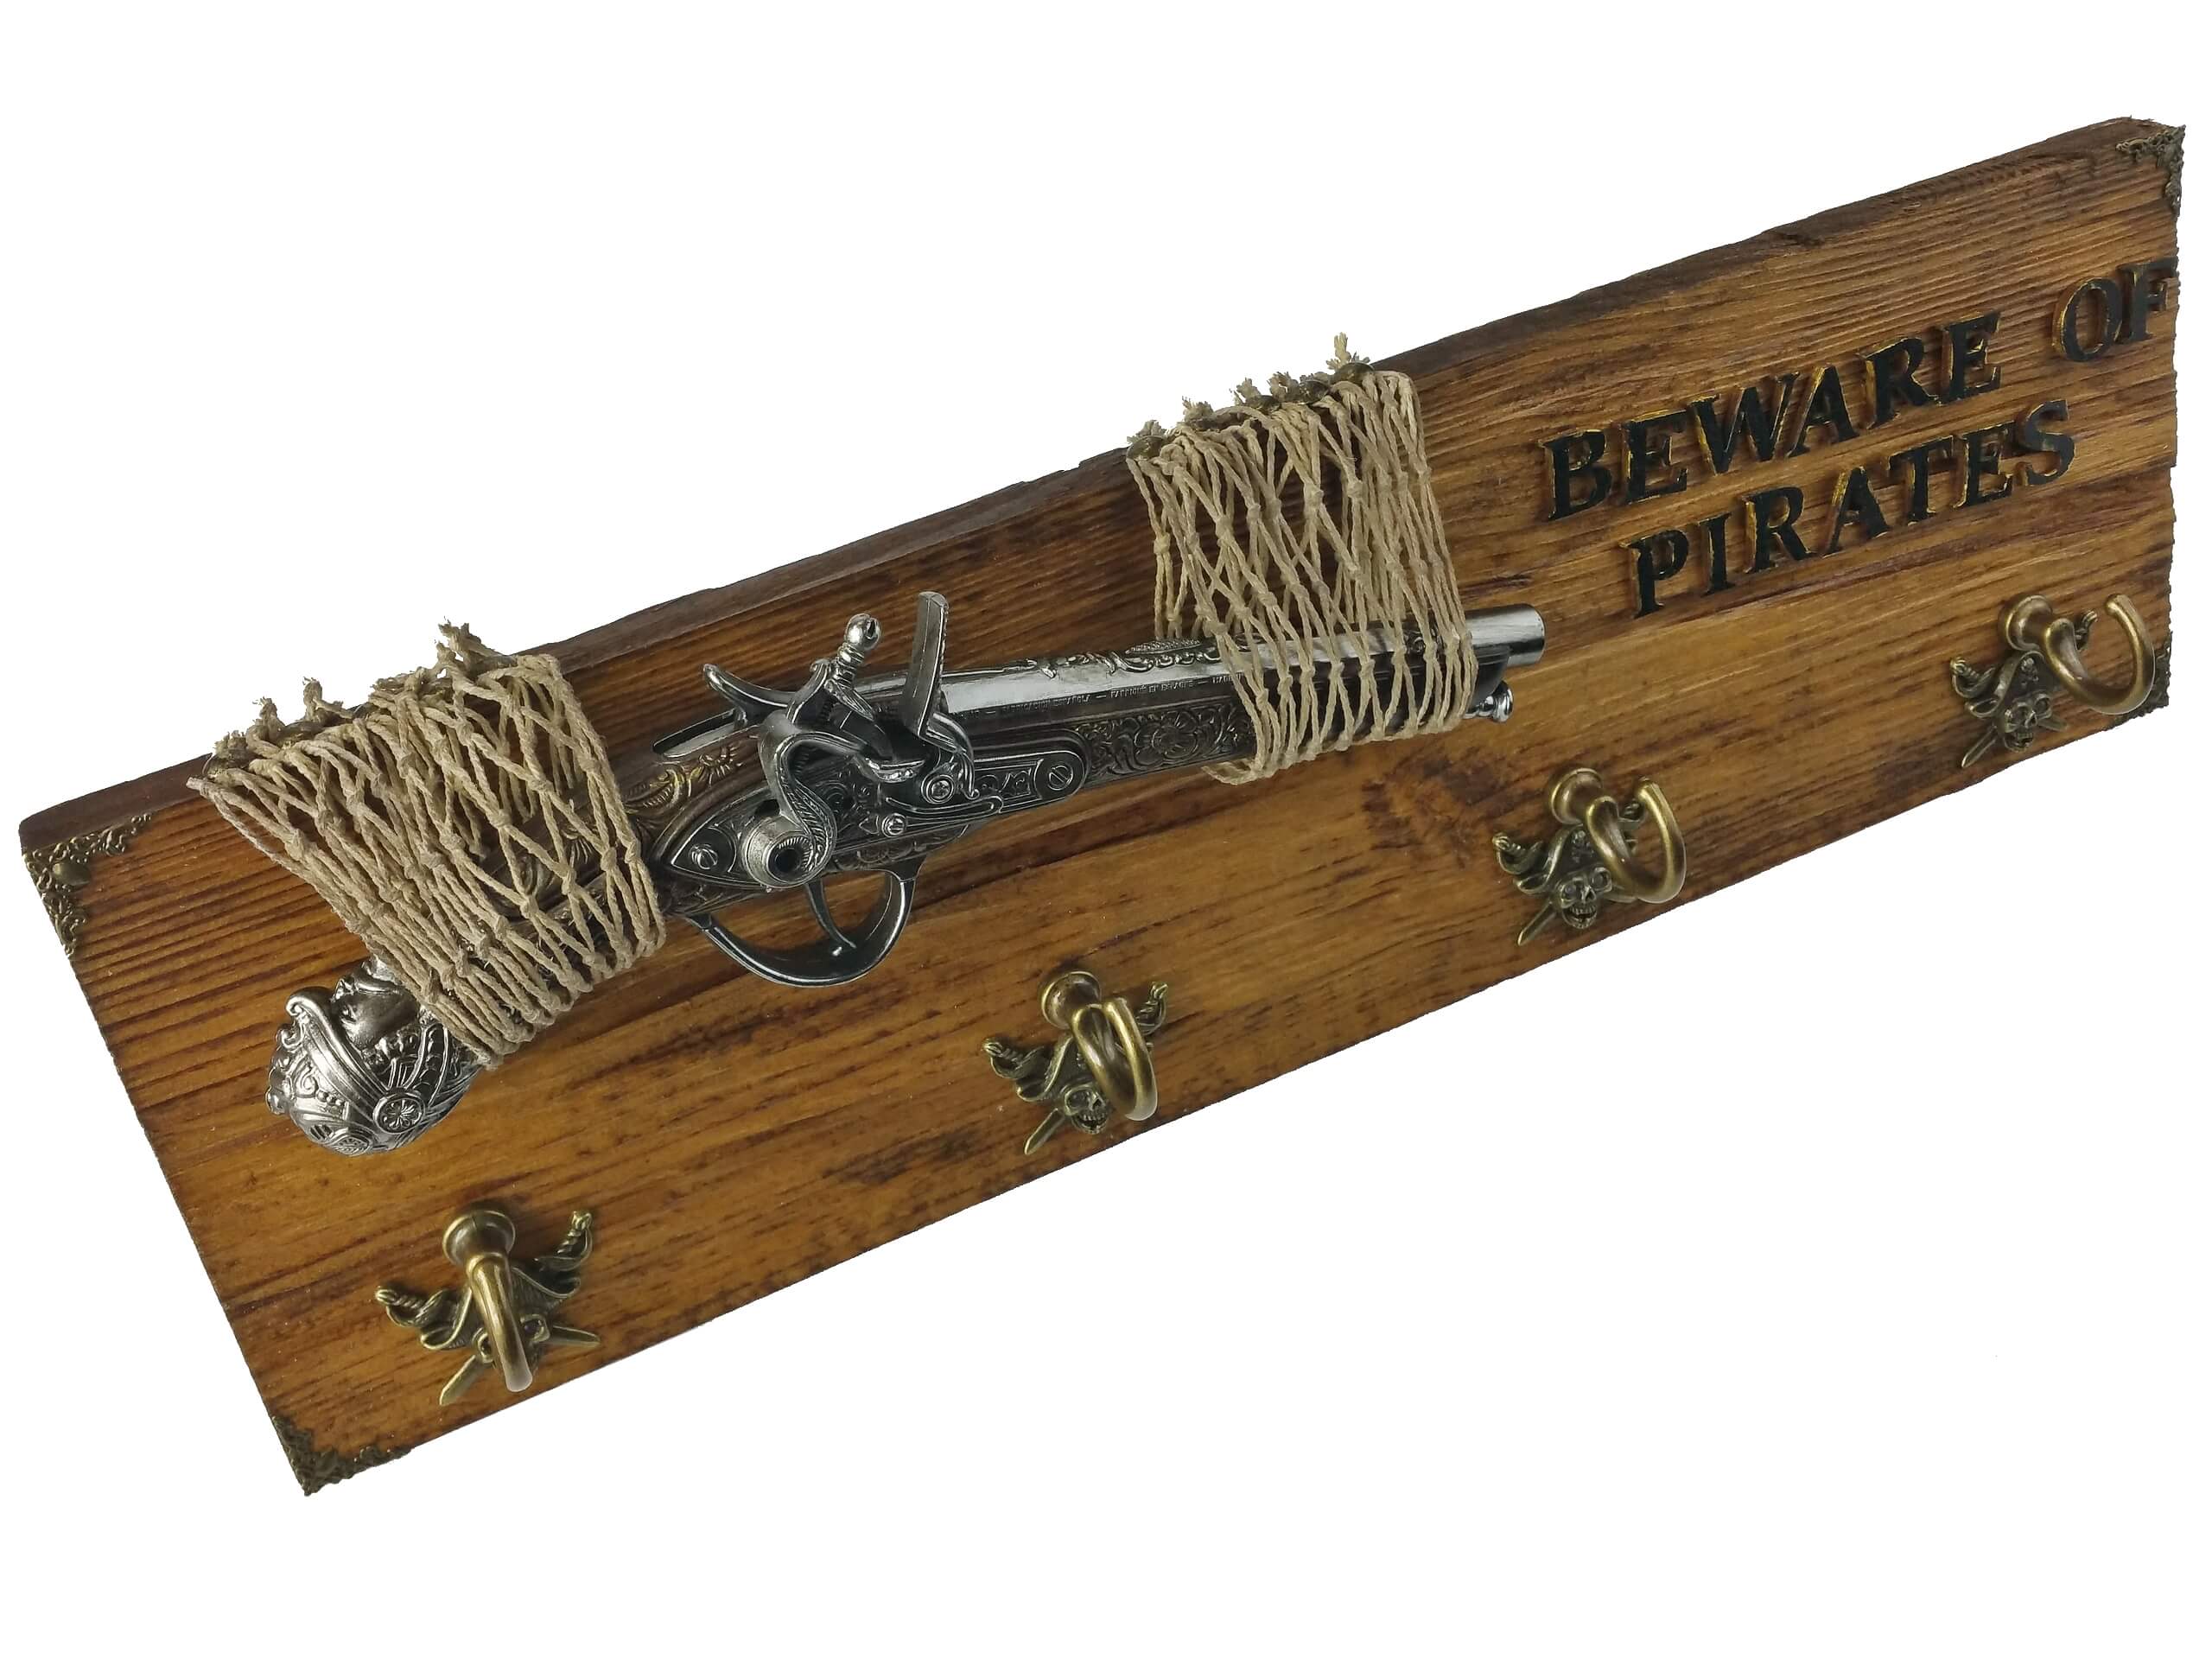 Wooden coat rack with pirate pistol